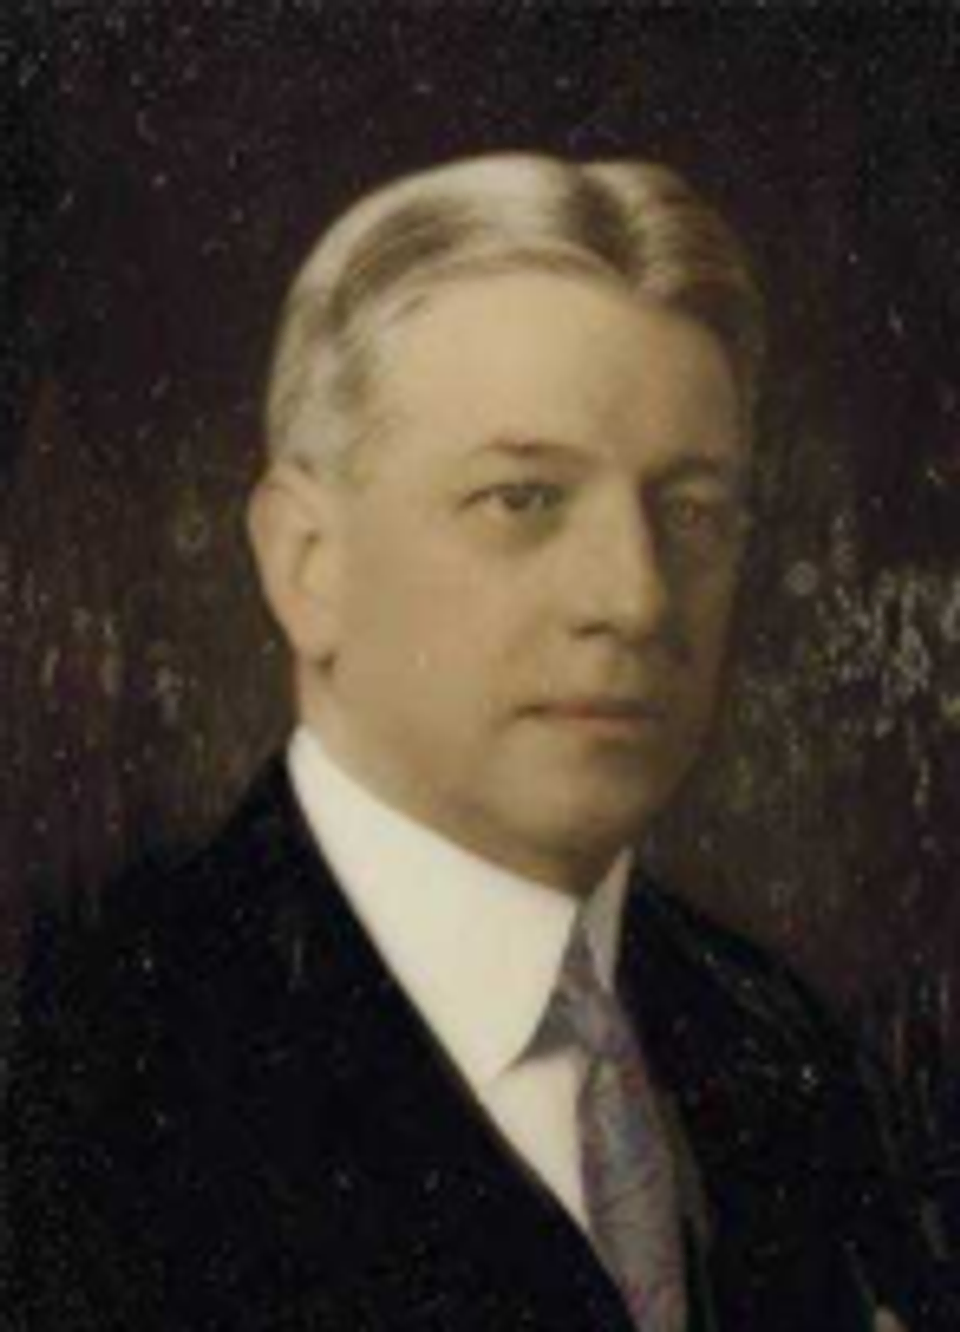 A portrait of Past Sovereign Grand Commander Melvin M. Johnson